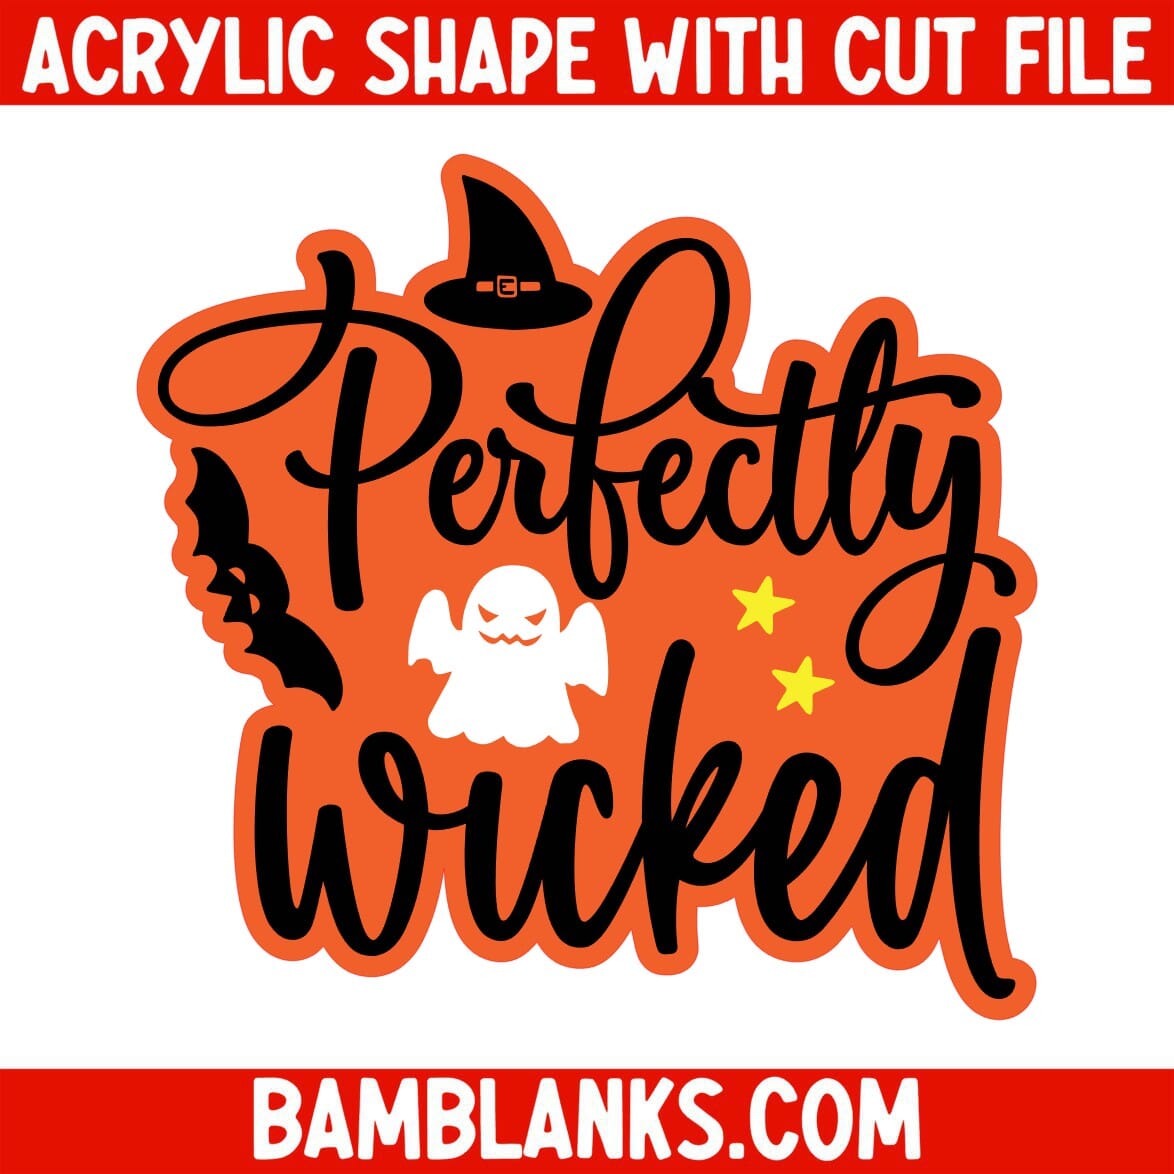 Perfectly Wicked - Acrylic Shape #1624